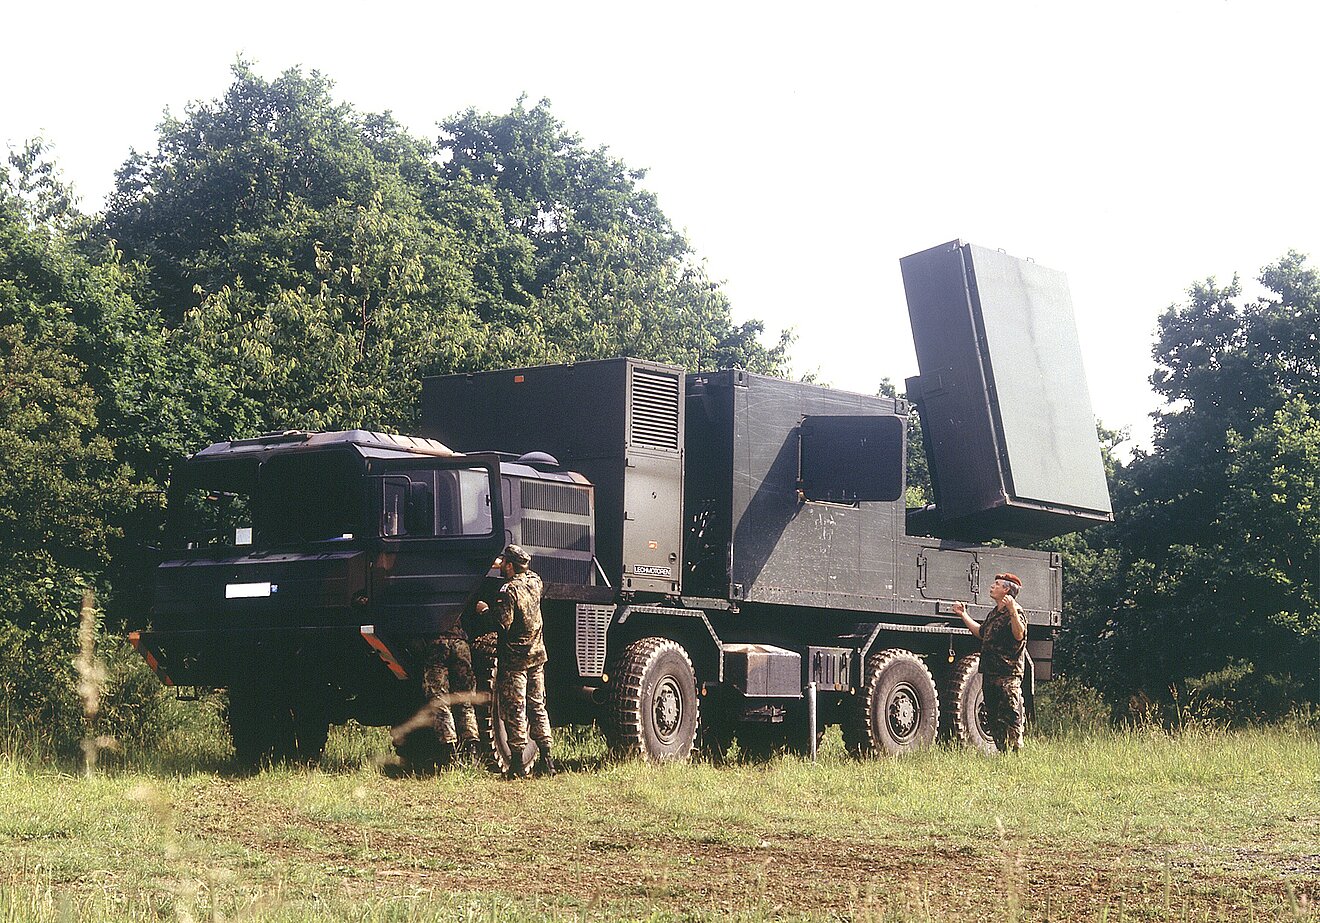 Artillery location radar Cobra of the German army in field